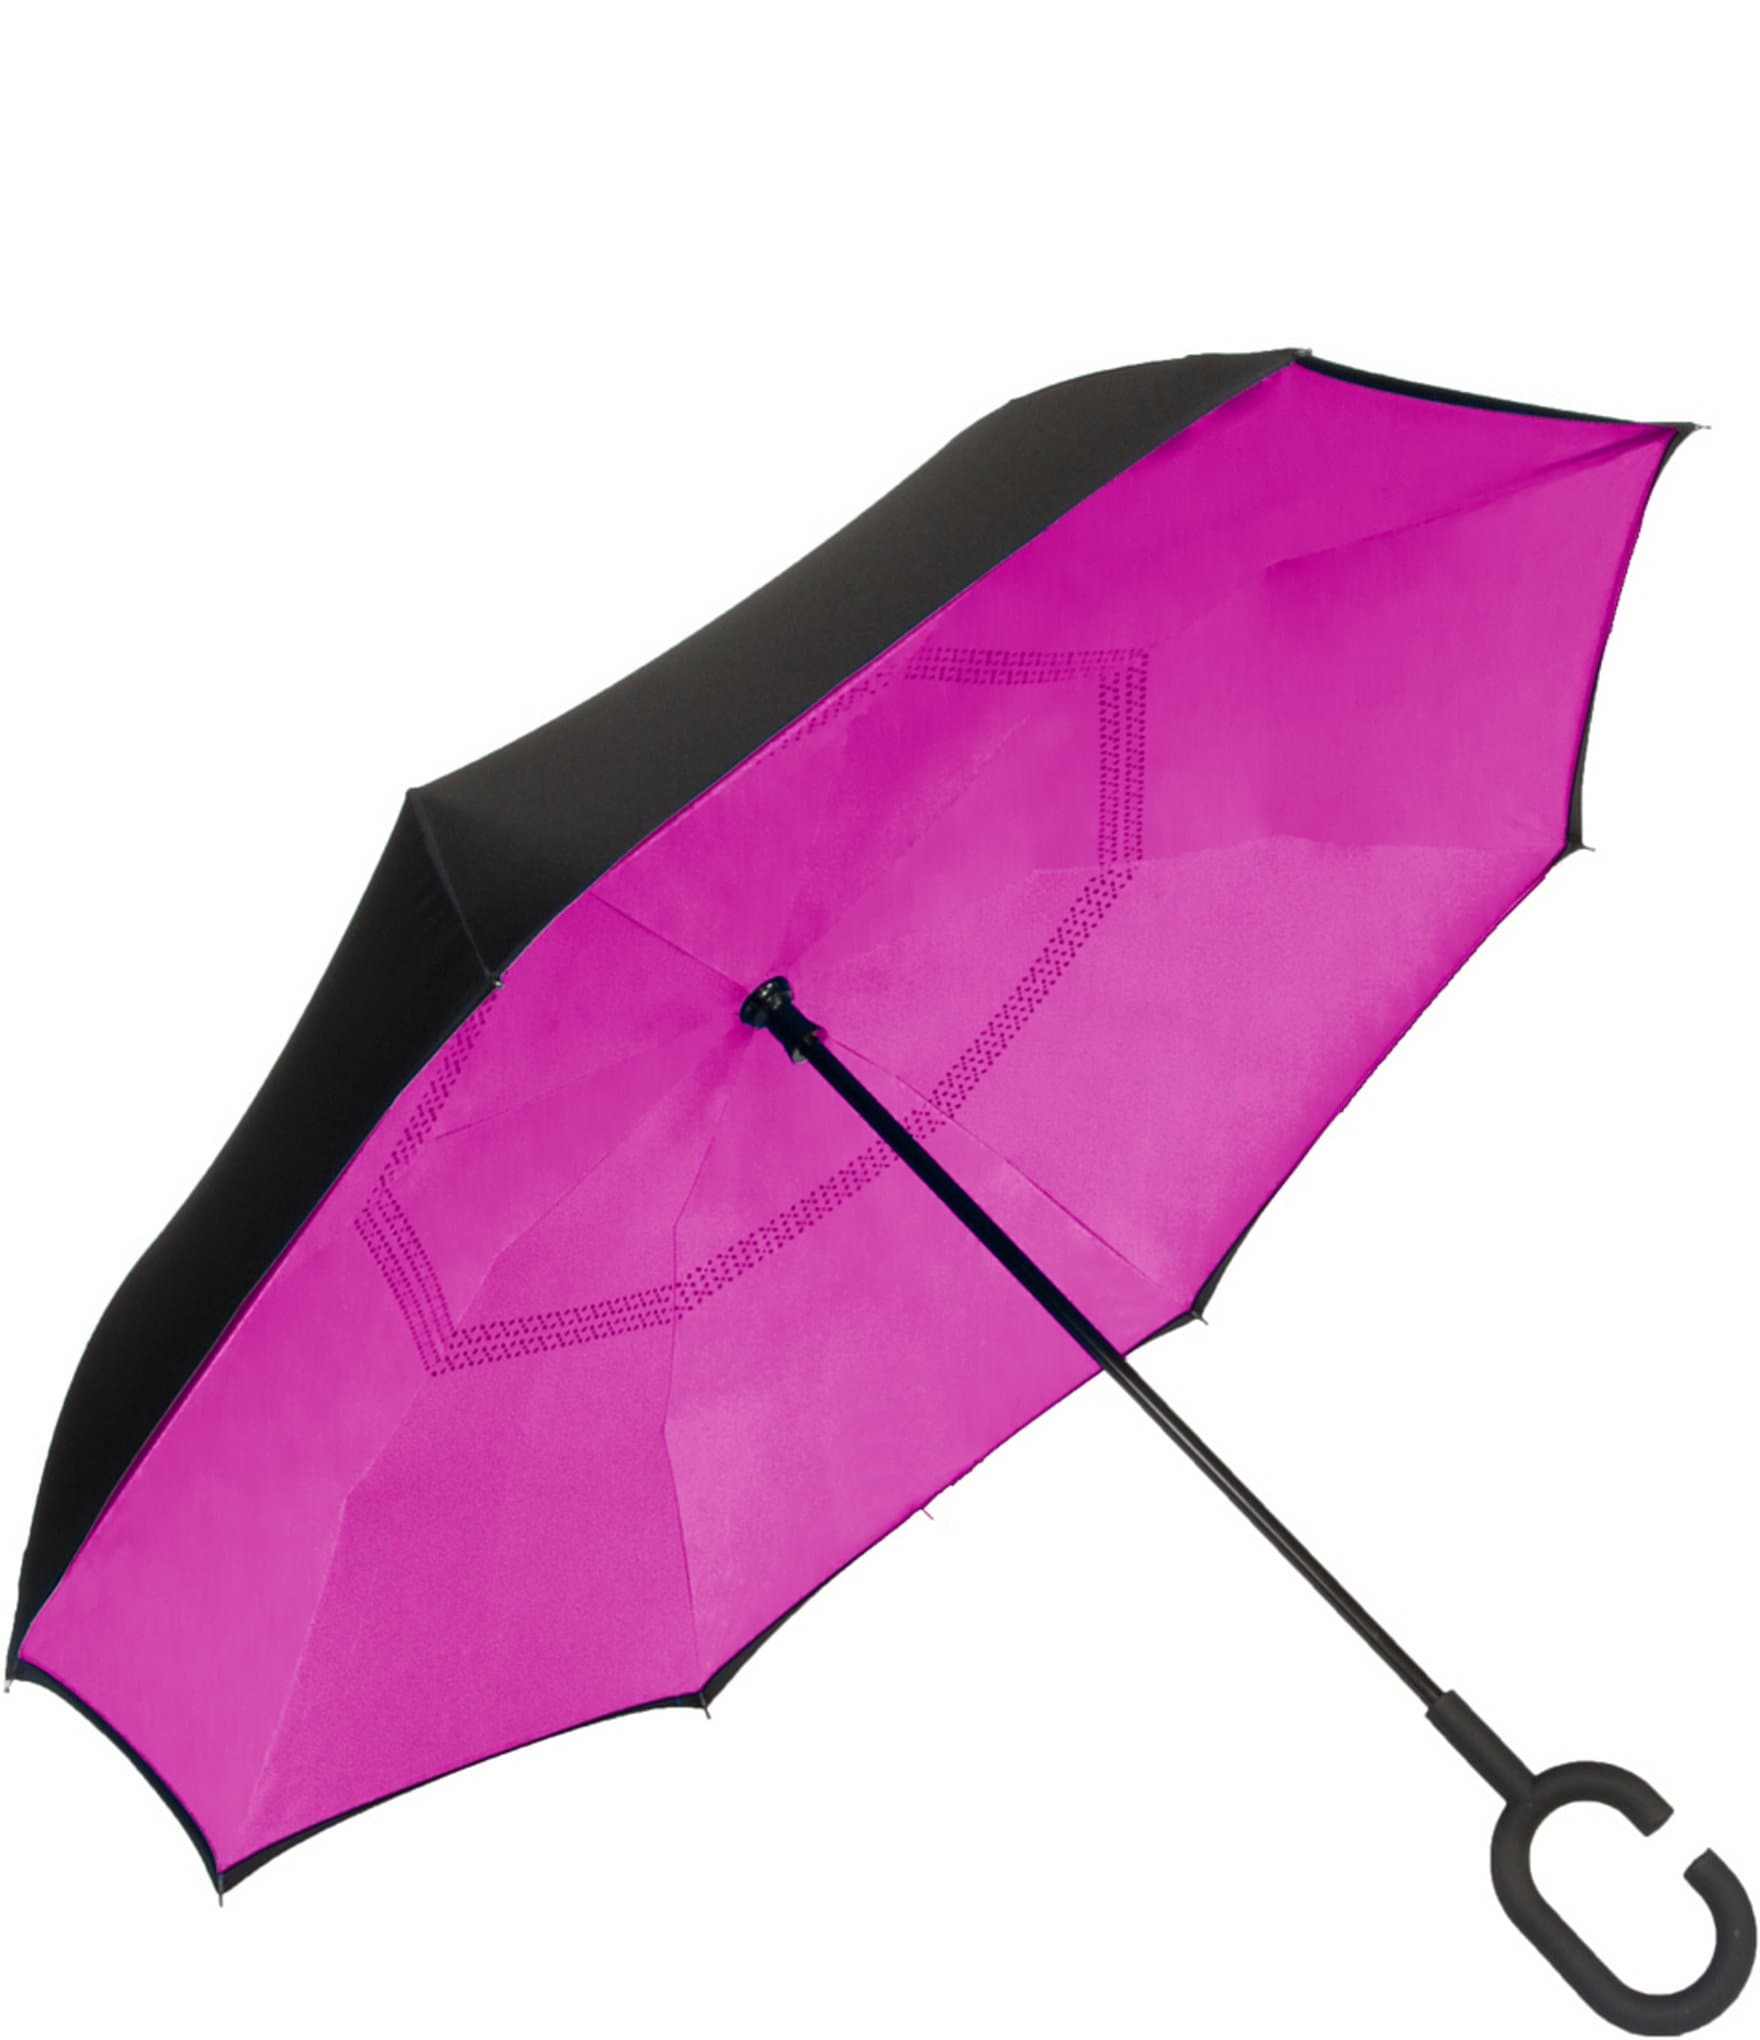 Black and Charcoal Grey ShedRain UnbelievaBrella Reverse Umbrella 